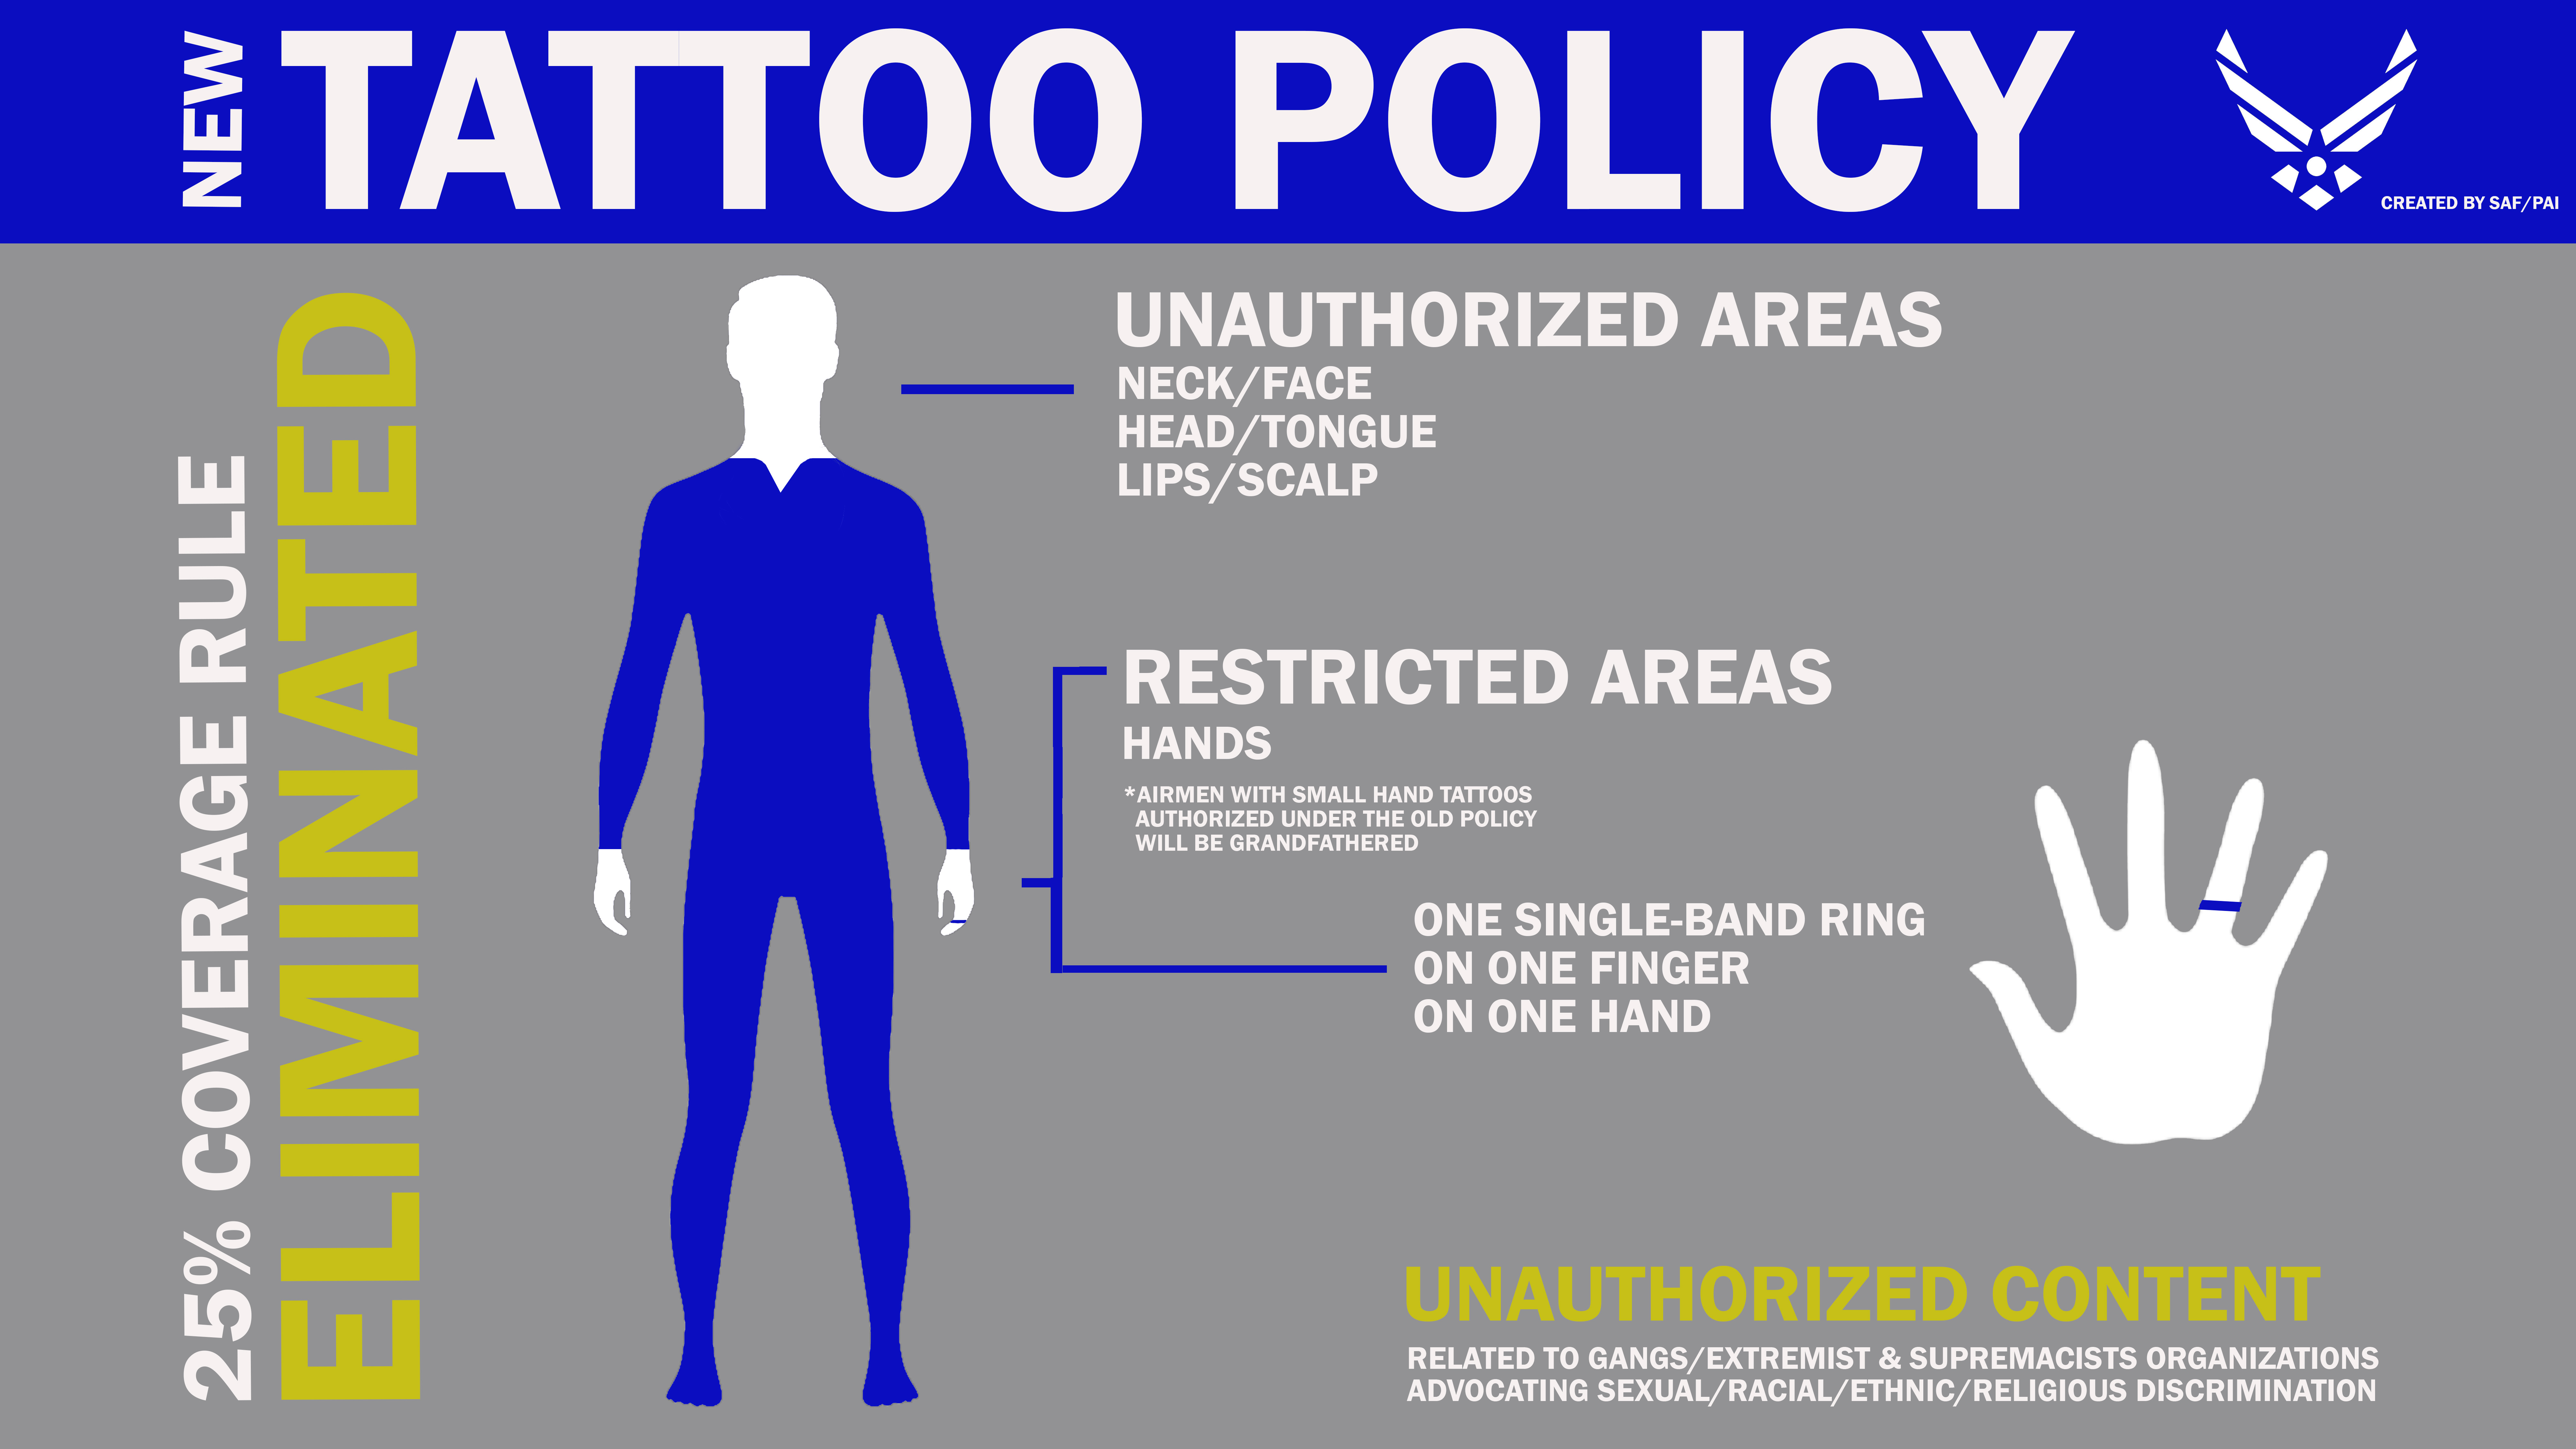 Liberalized Air Force tattoo rules effective Feb. 1 > National